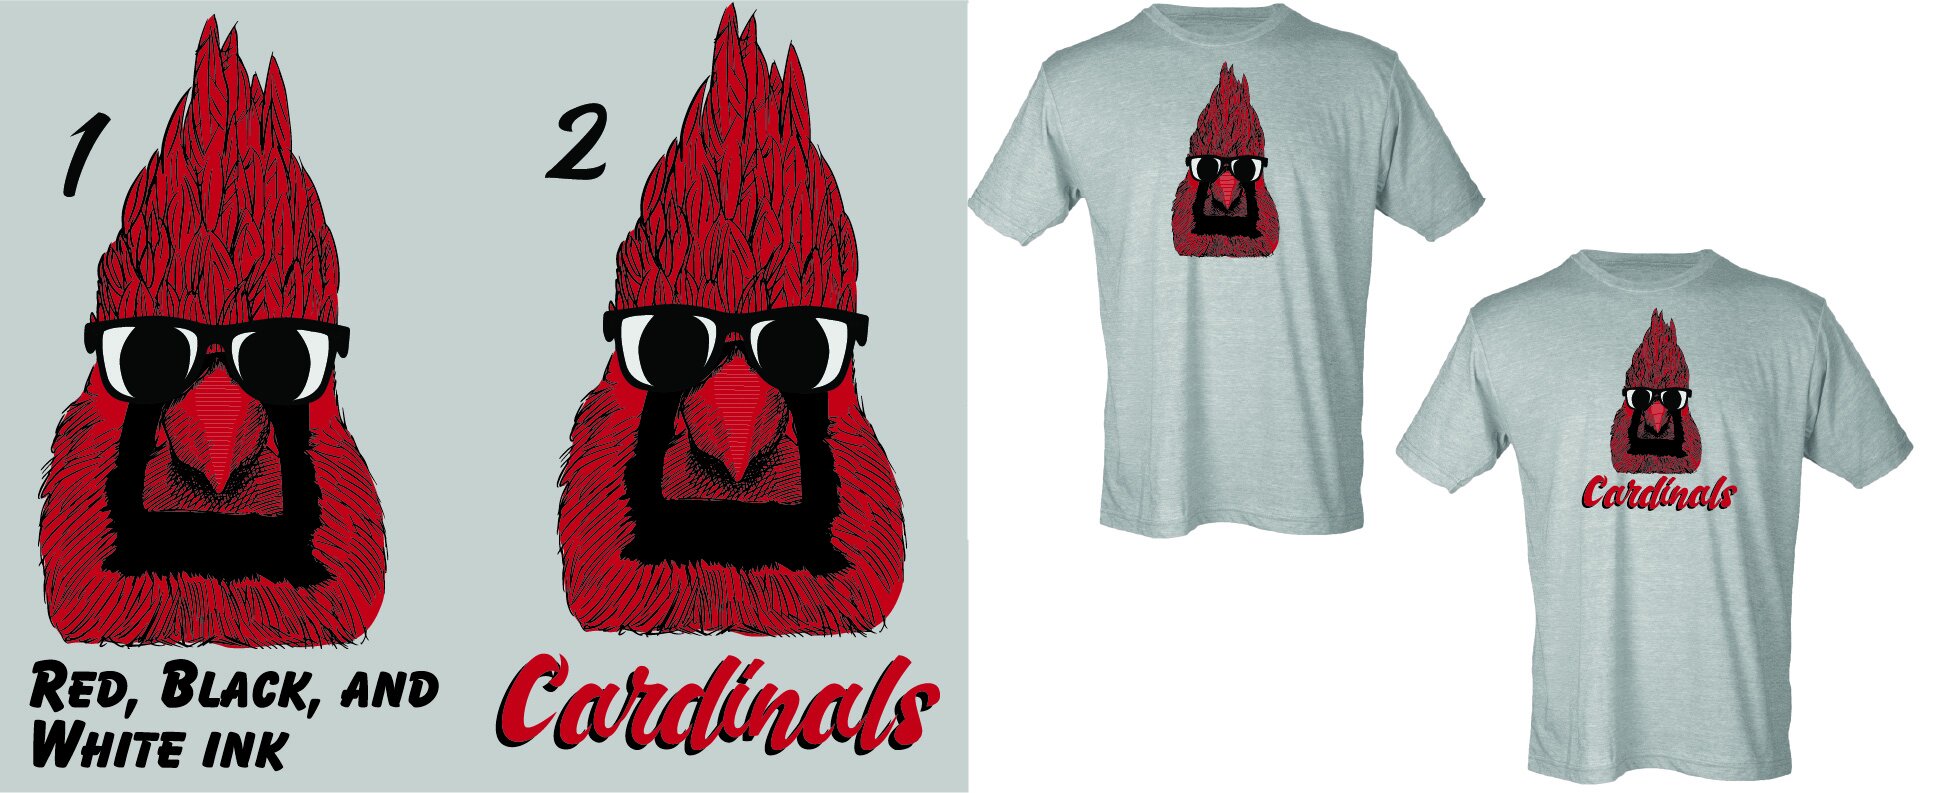 NKY Tees cardinals design.jpg